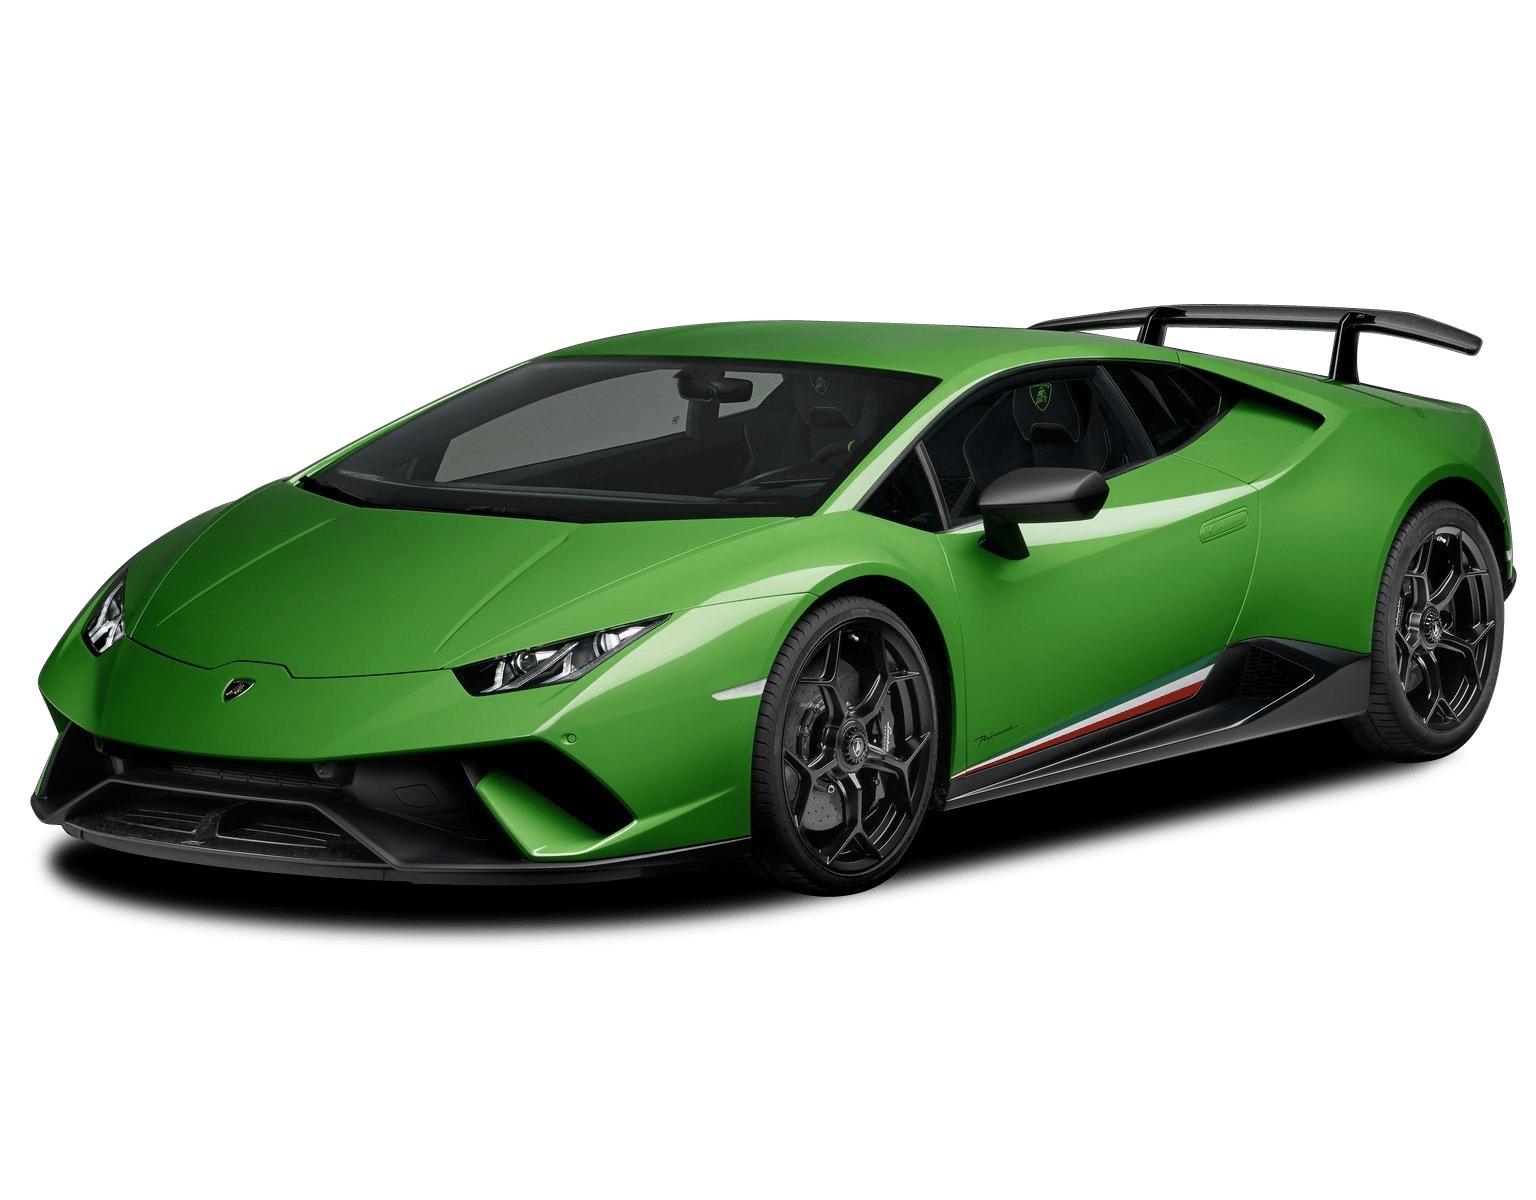 2021 Lamborghini Huracán Review, Pricing, and Specs